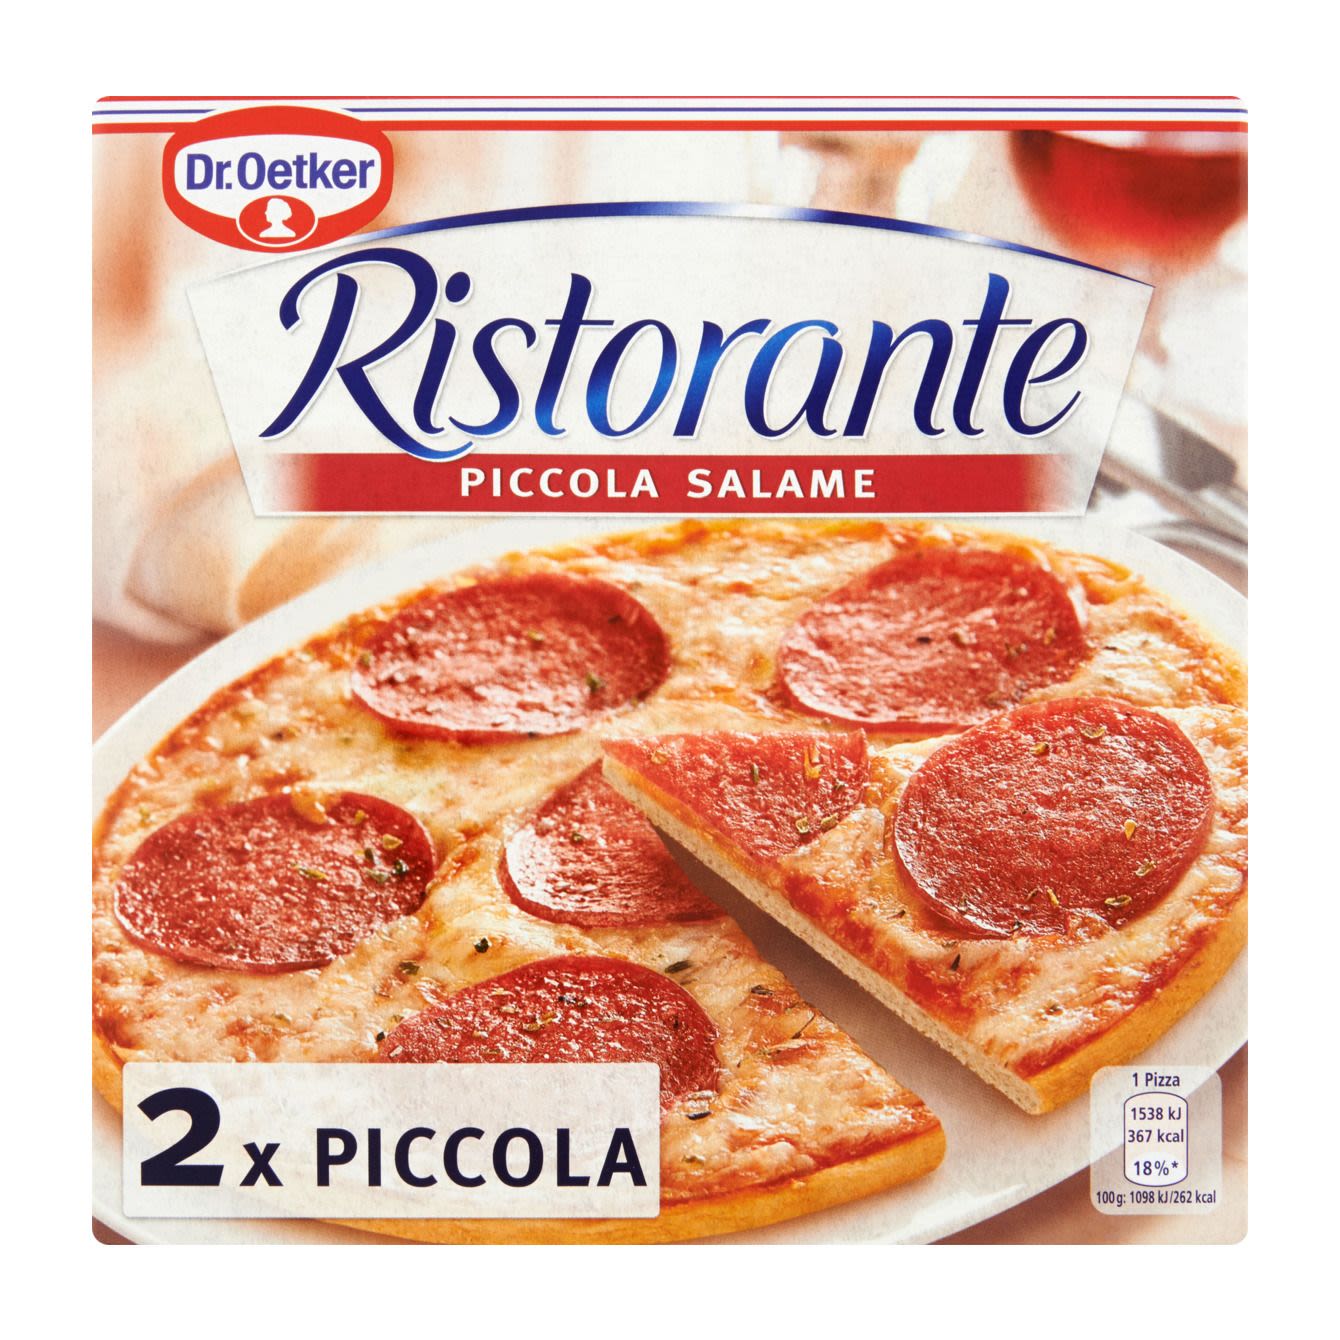 Dr. Oetker Mini Pizza Ristorante Piccola Salame online bestellen? Coop.nl